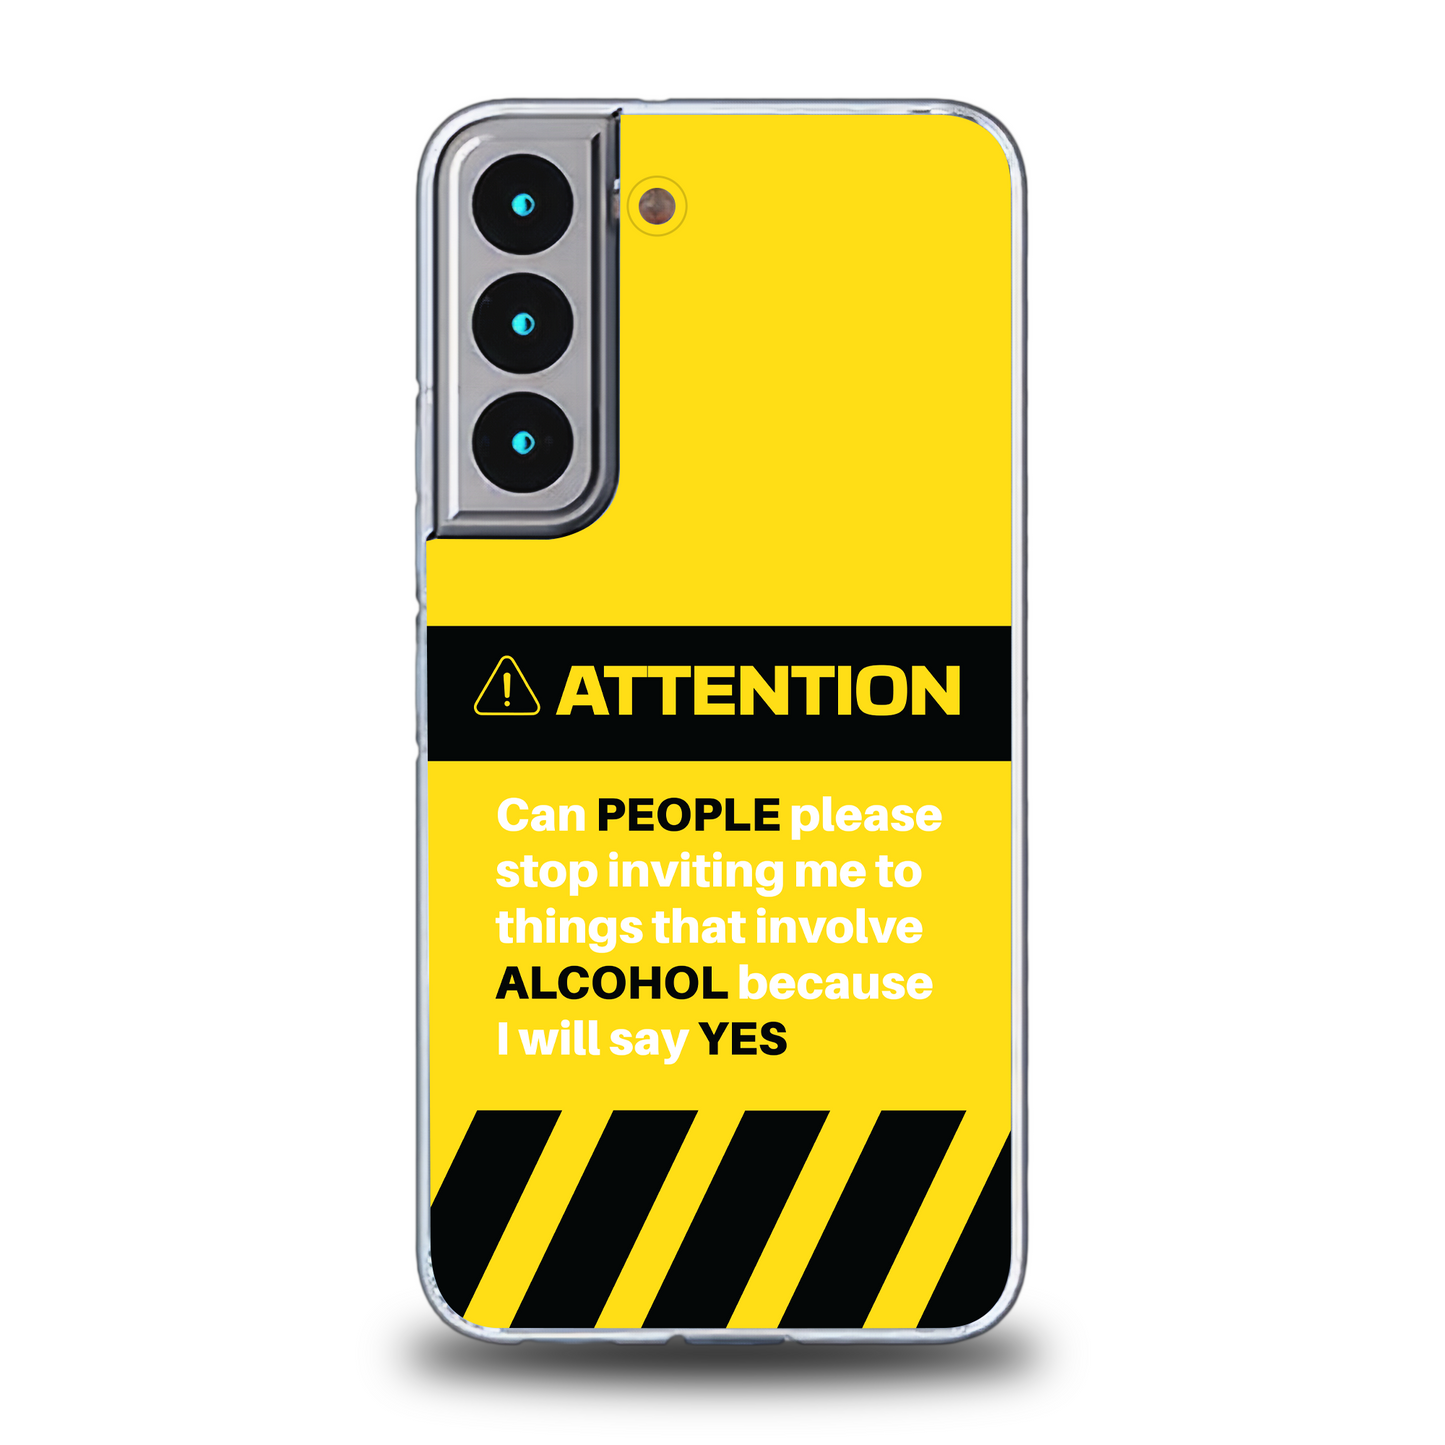 Attention Phone Case - Samsung